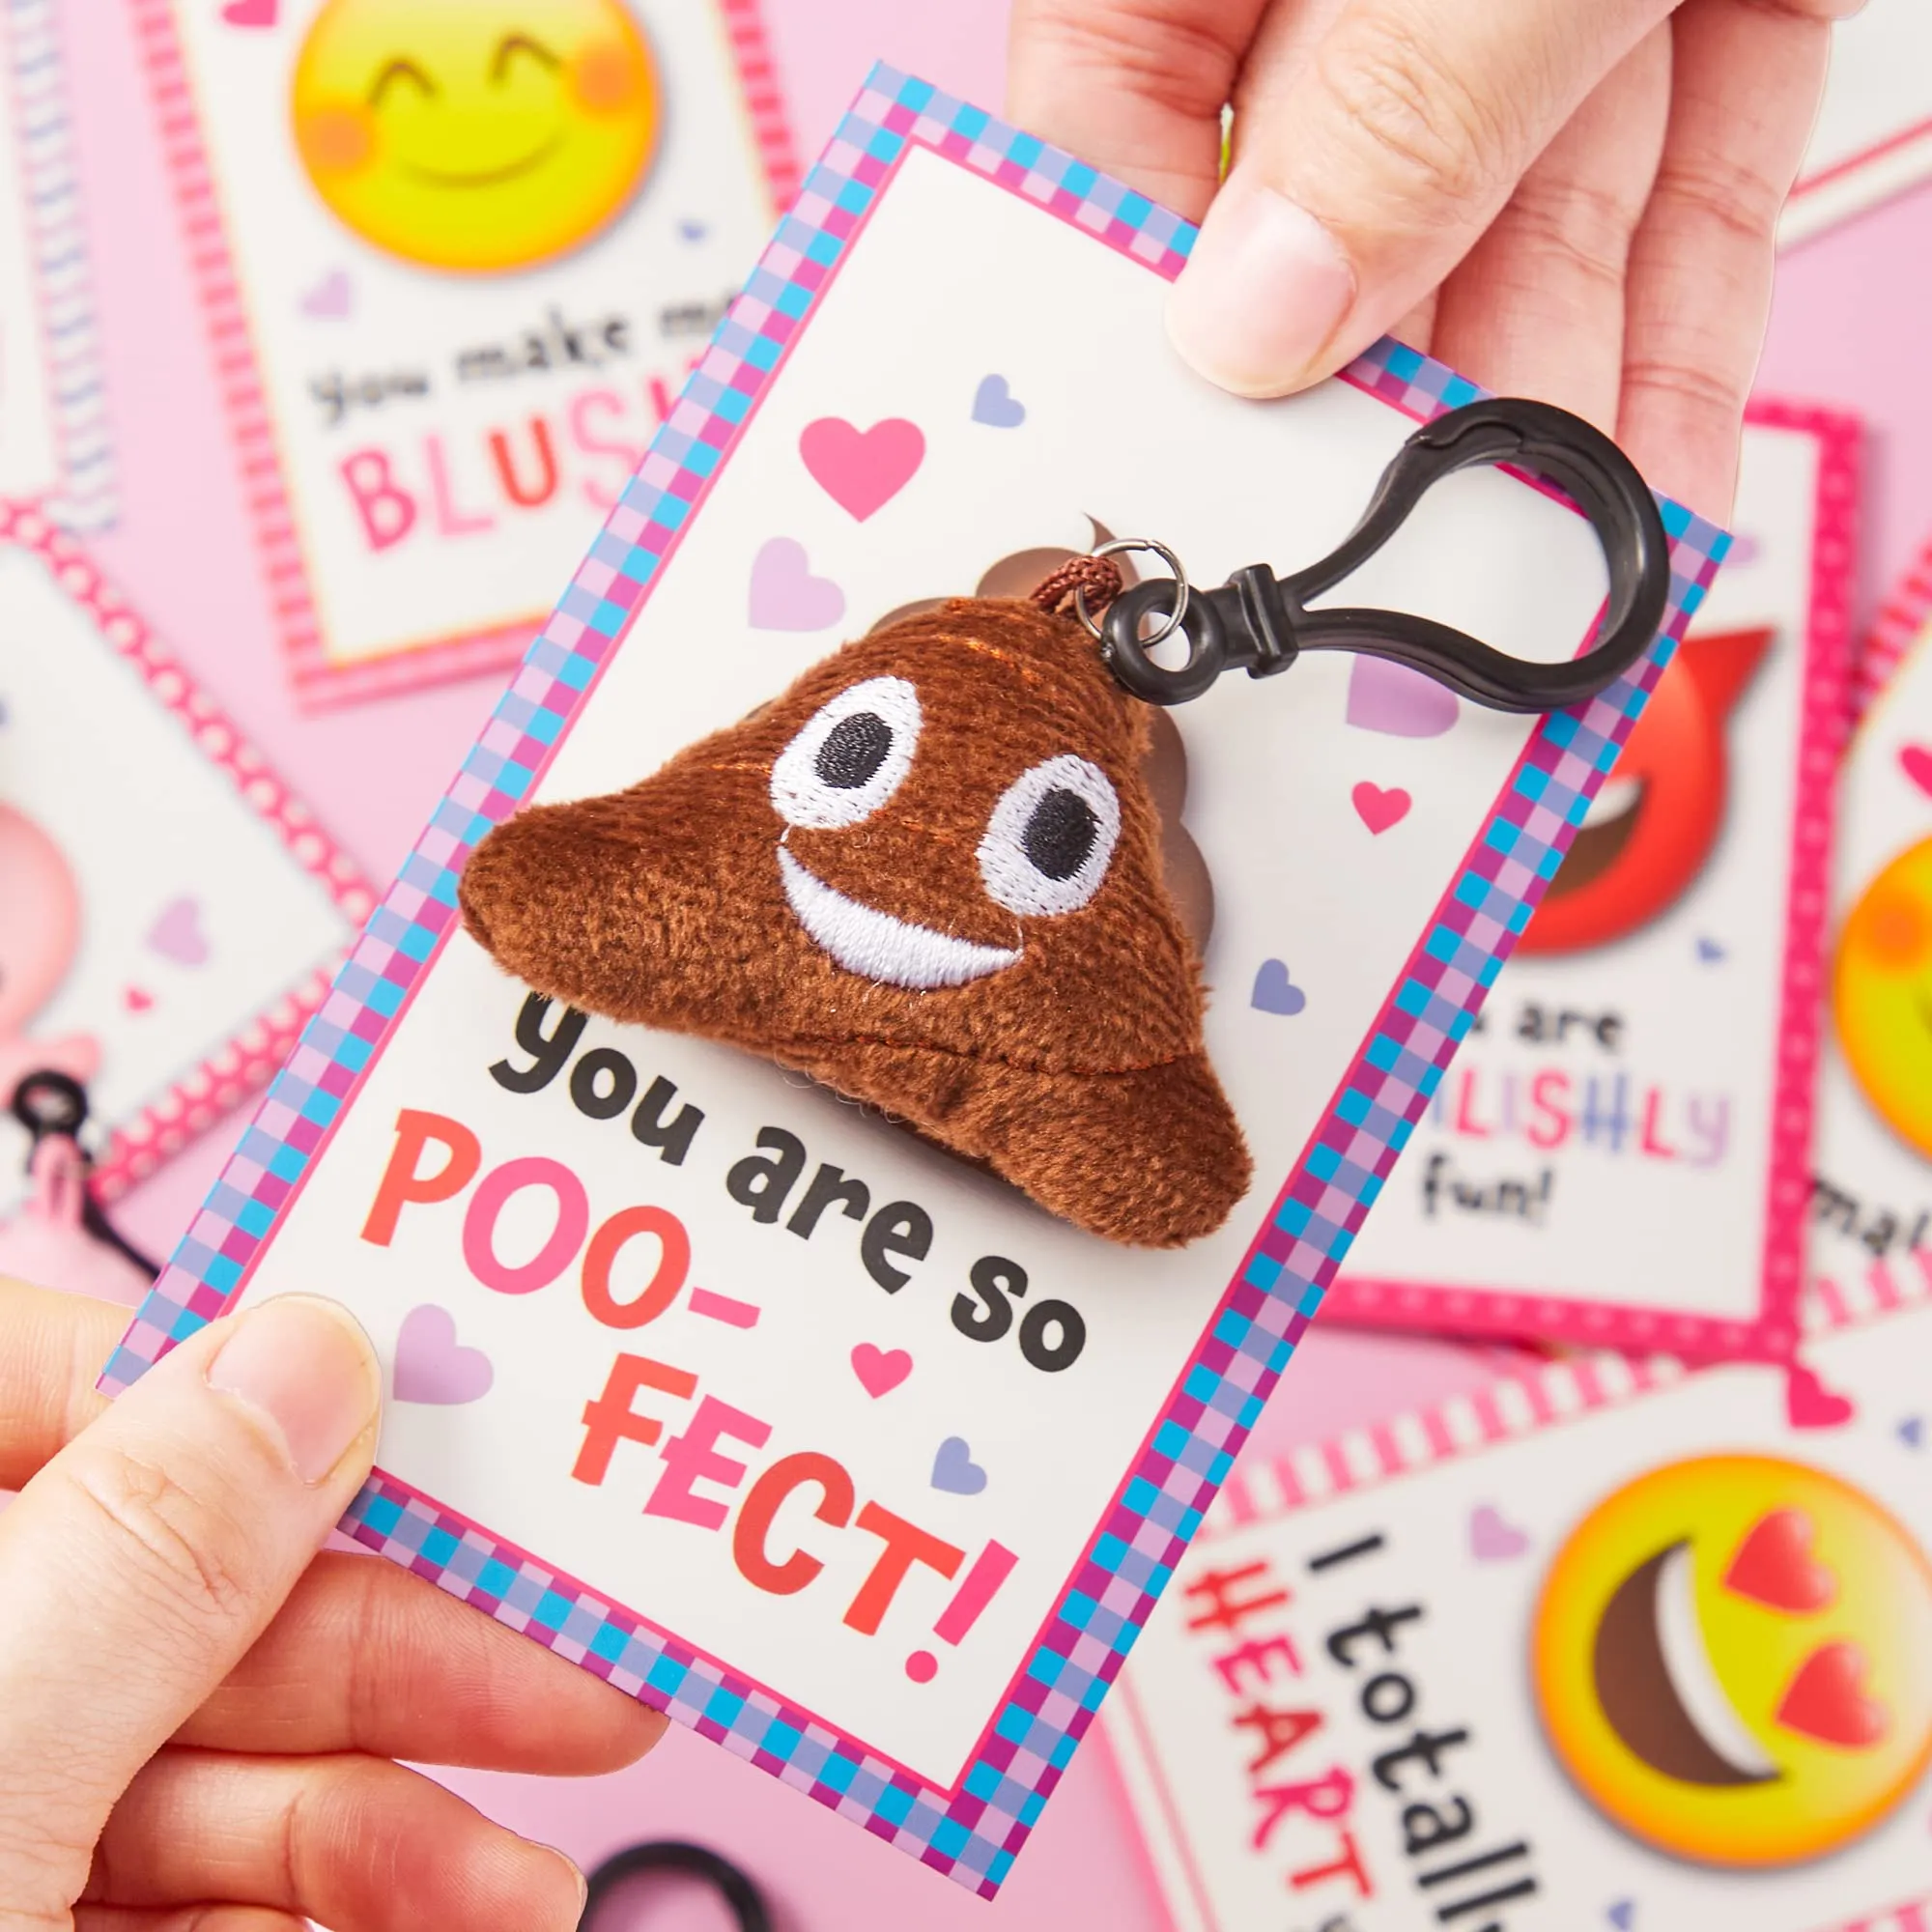 Plush Keychains Plush Emoji Poop Keychain Set of 12 